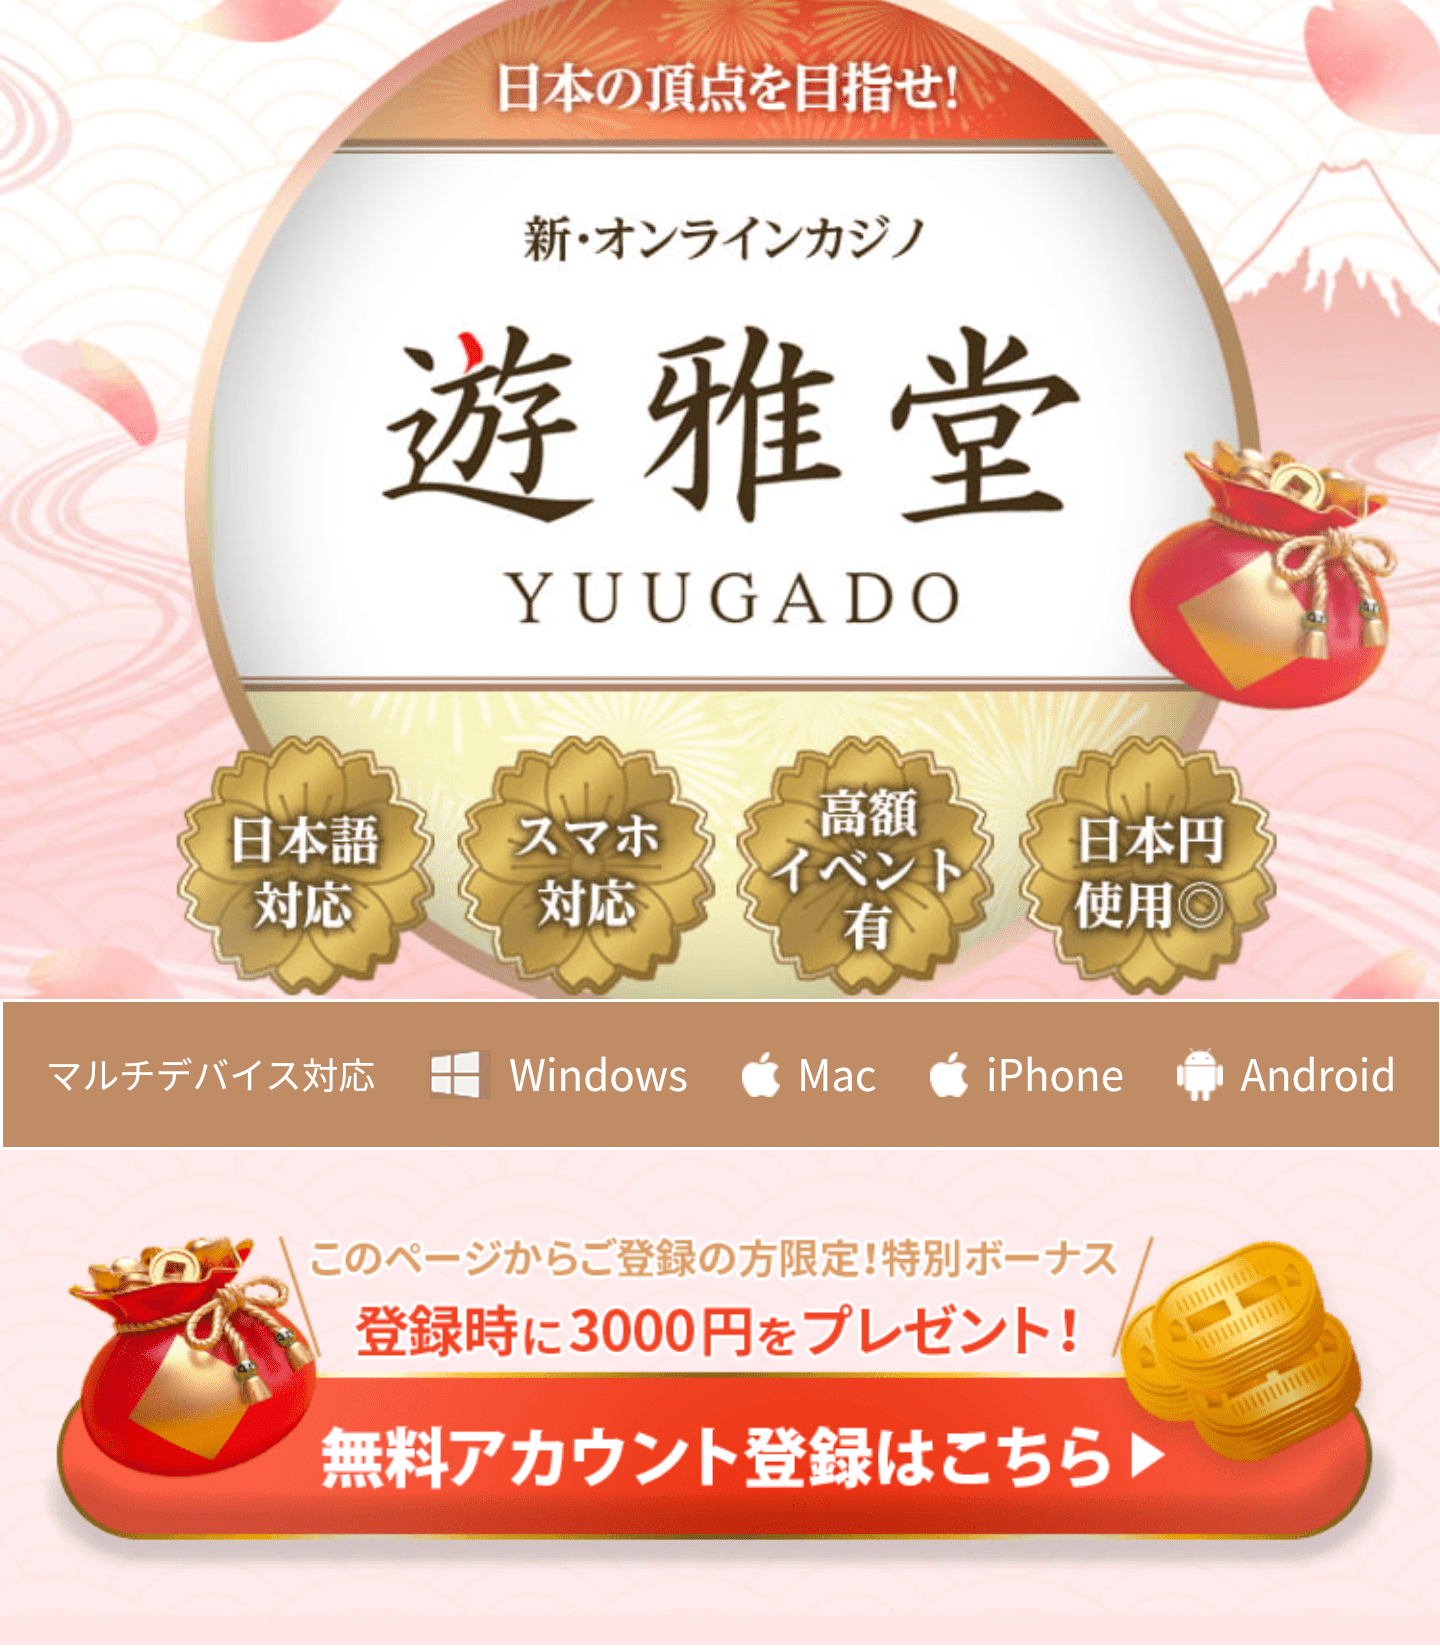 Yuugado Free Registration No Deposit Bonus $30 Online Casino